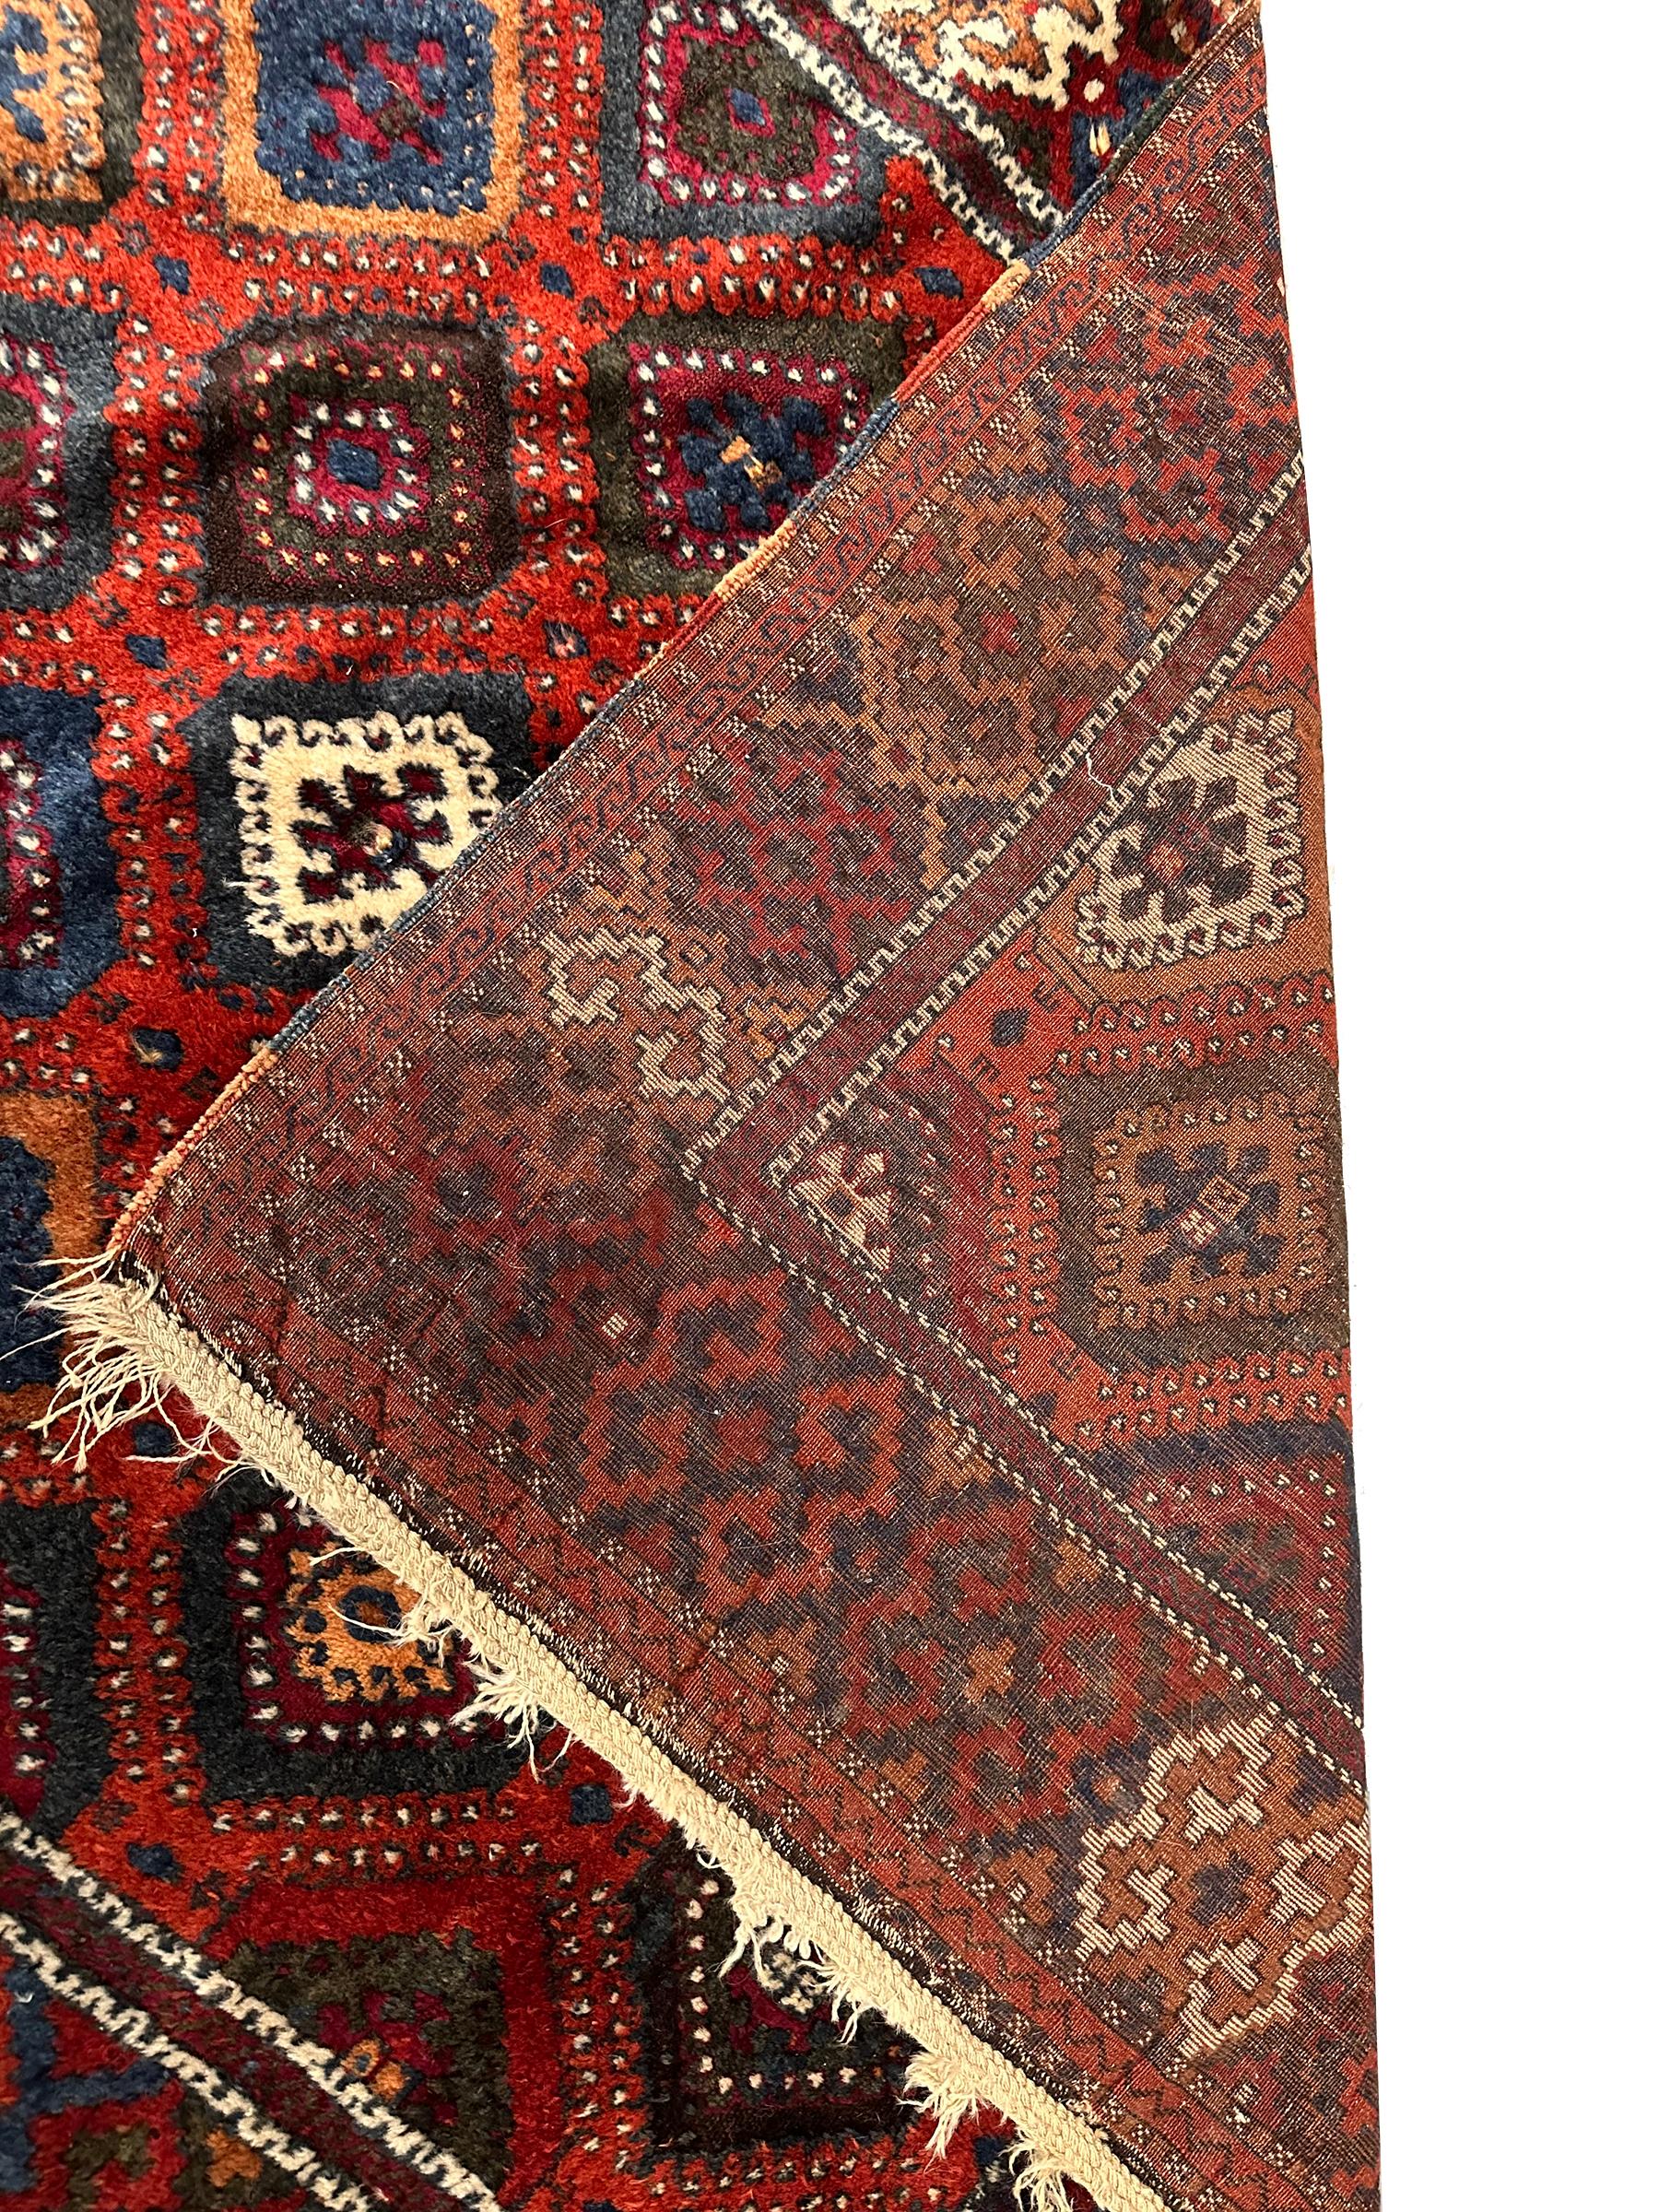 1880 Rare Antique Turkish Rug Tribal Geometric 4x6 130cm x 170cm For Sale 3